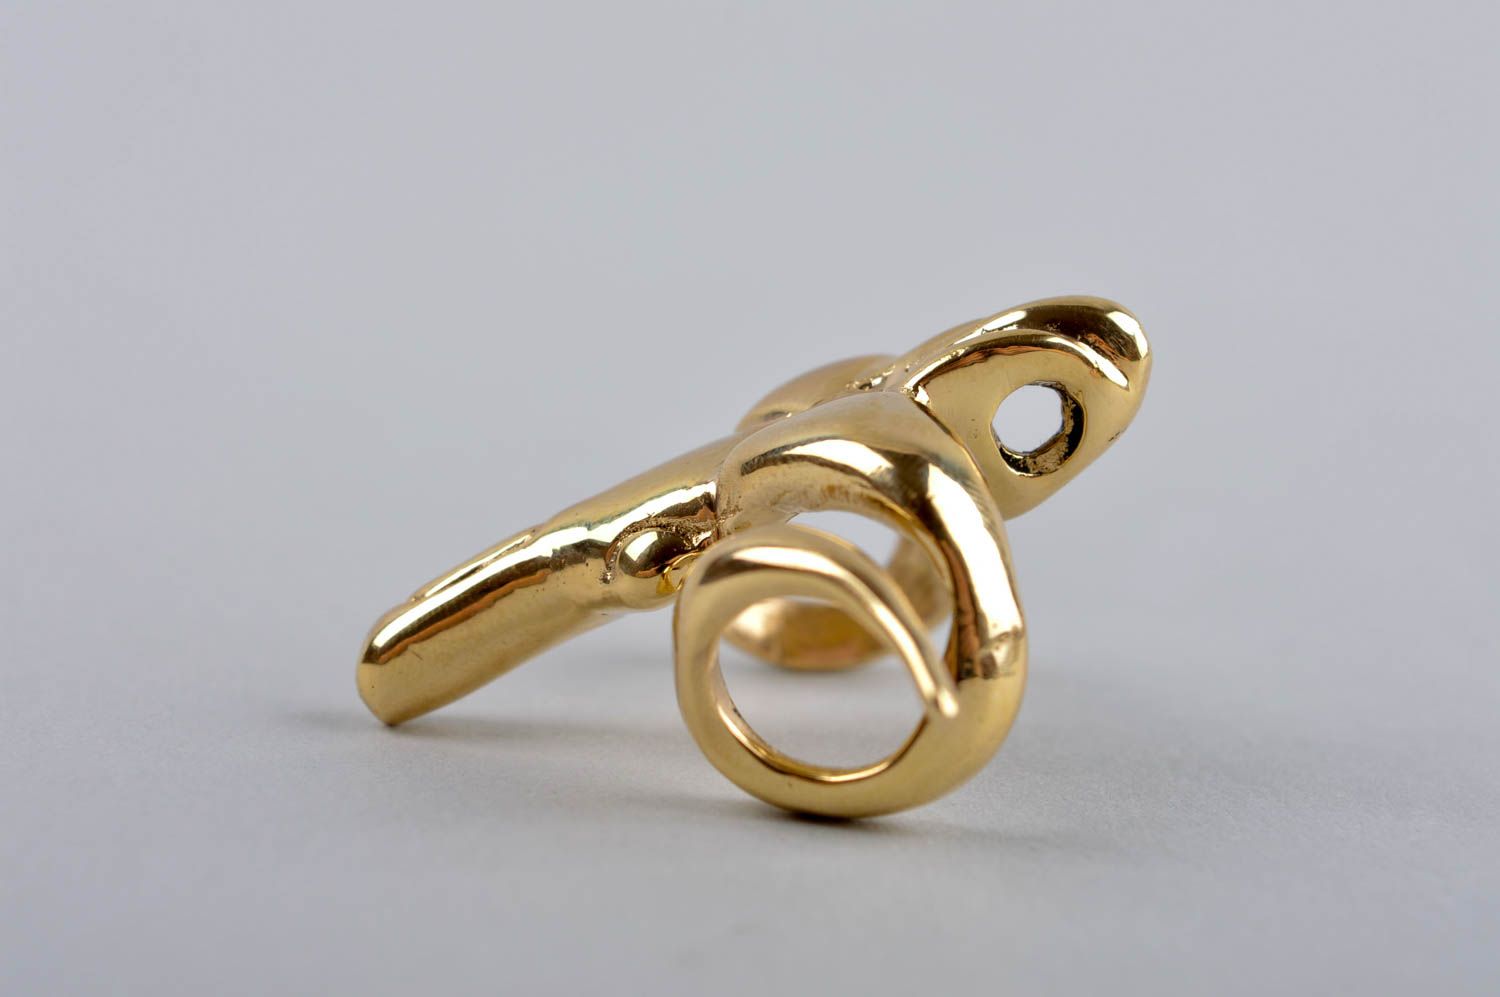 Handmade metal pendant unusual brass pendant stylish designer accessory photo 3